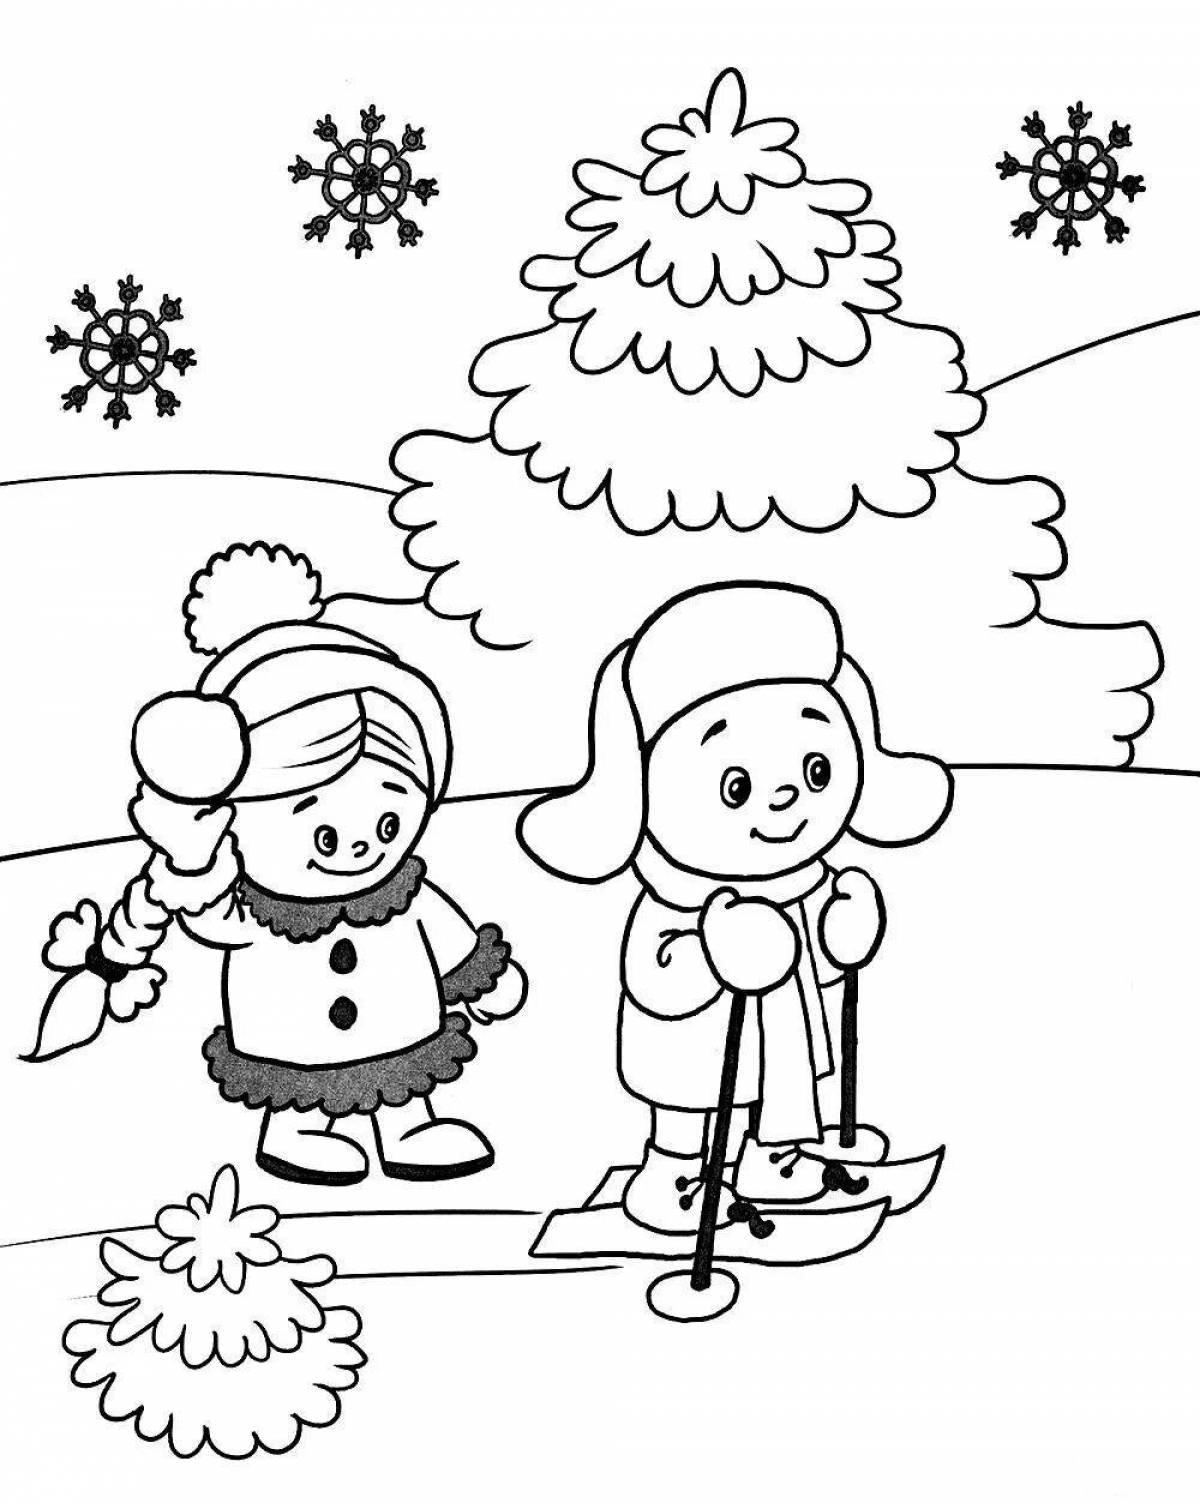 Entertaining winter drawing